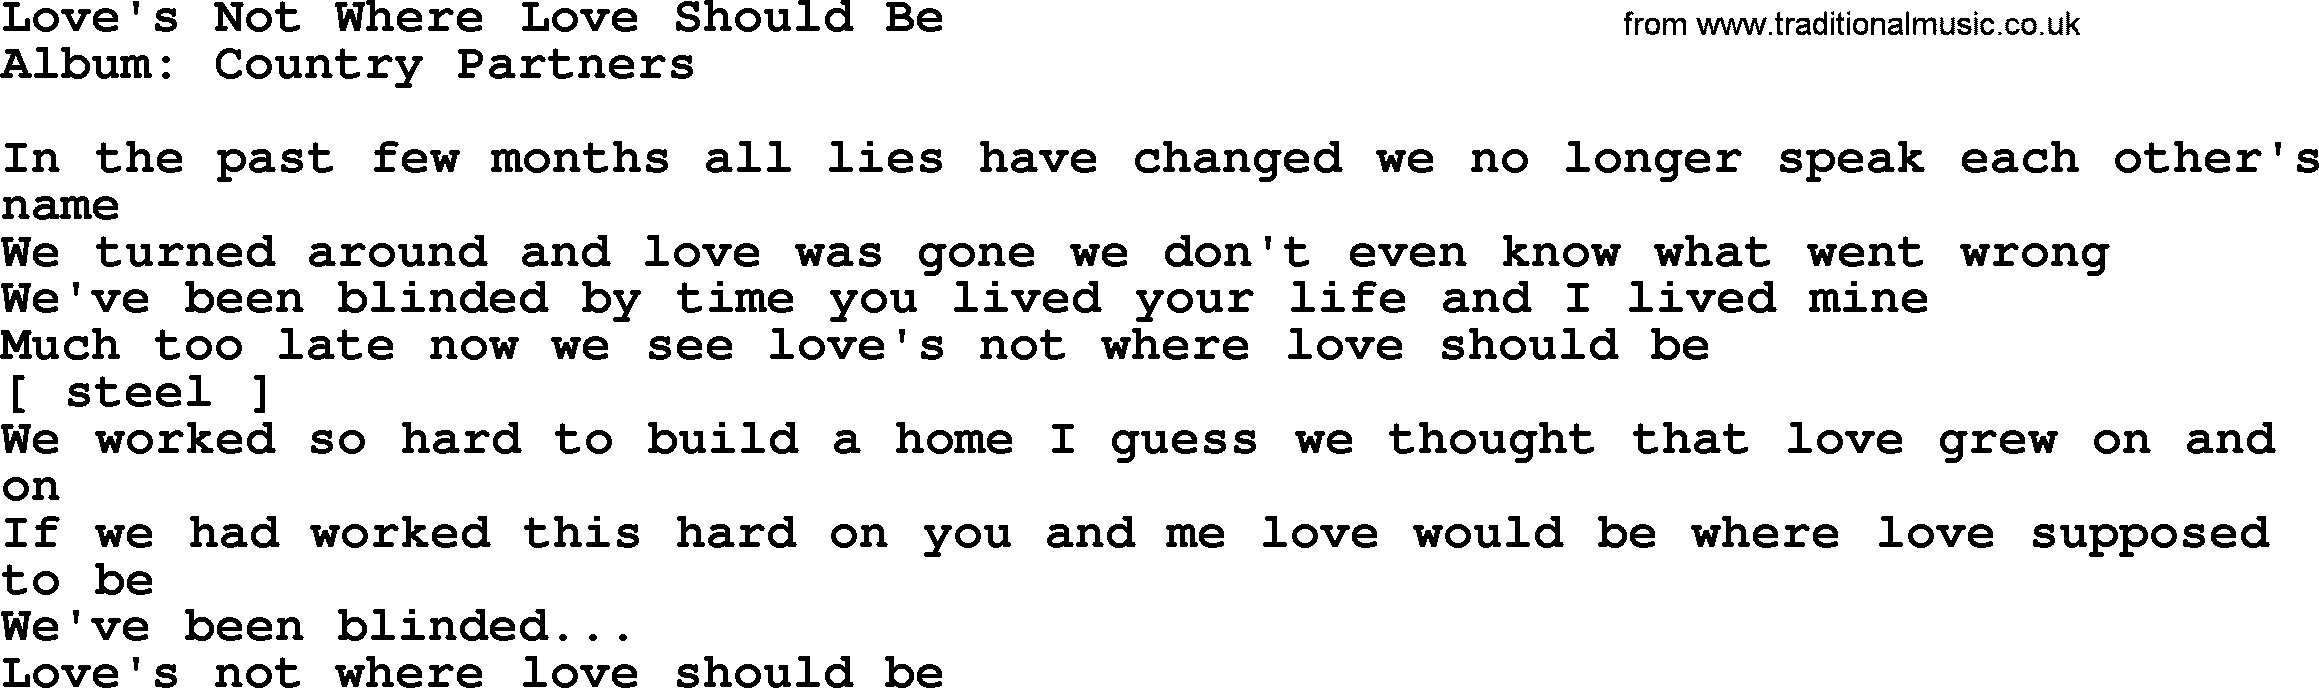 Loretta Lynn song: Love's Not Where Love Should Be lyrics